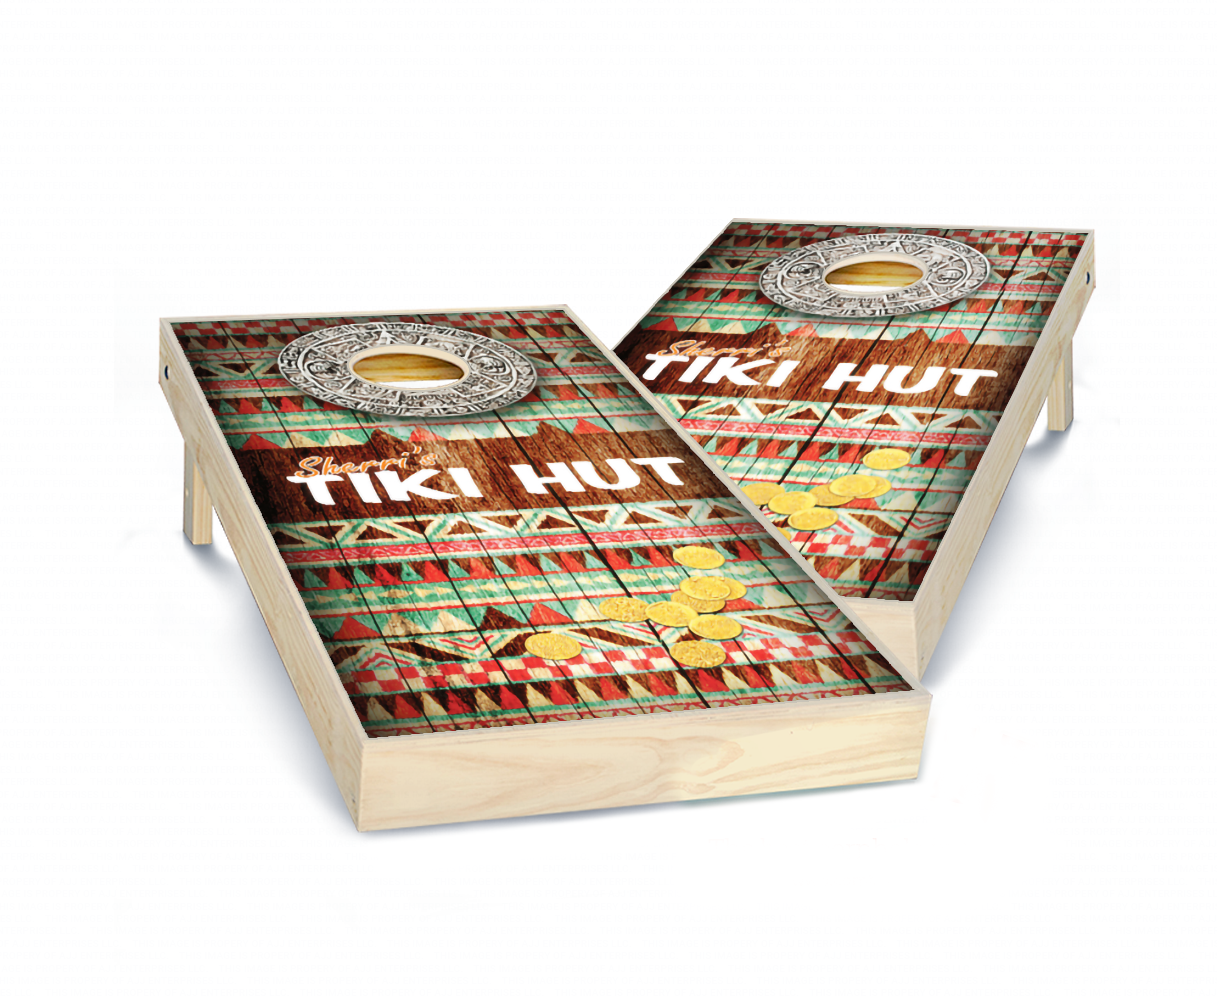 "Tiki Hut" Cornhole Boards